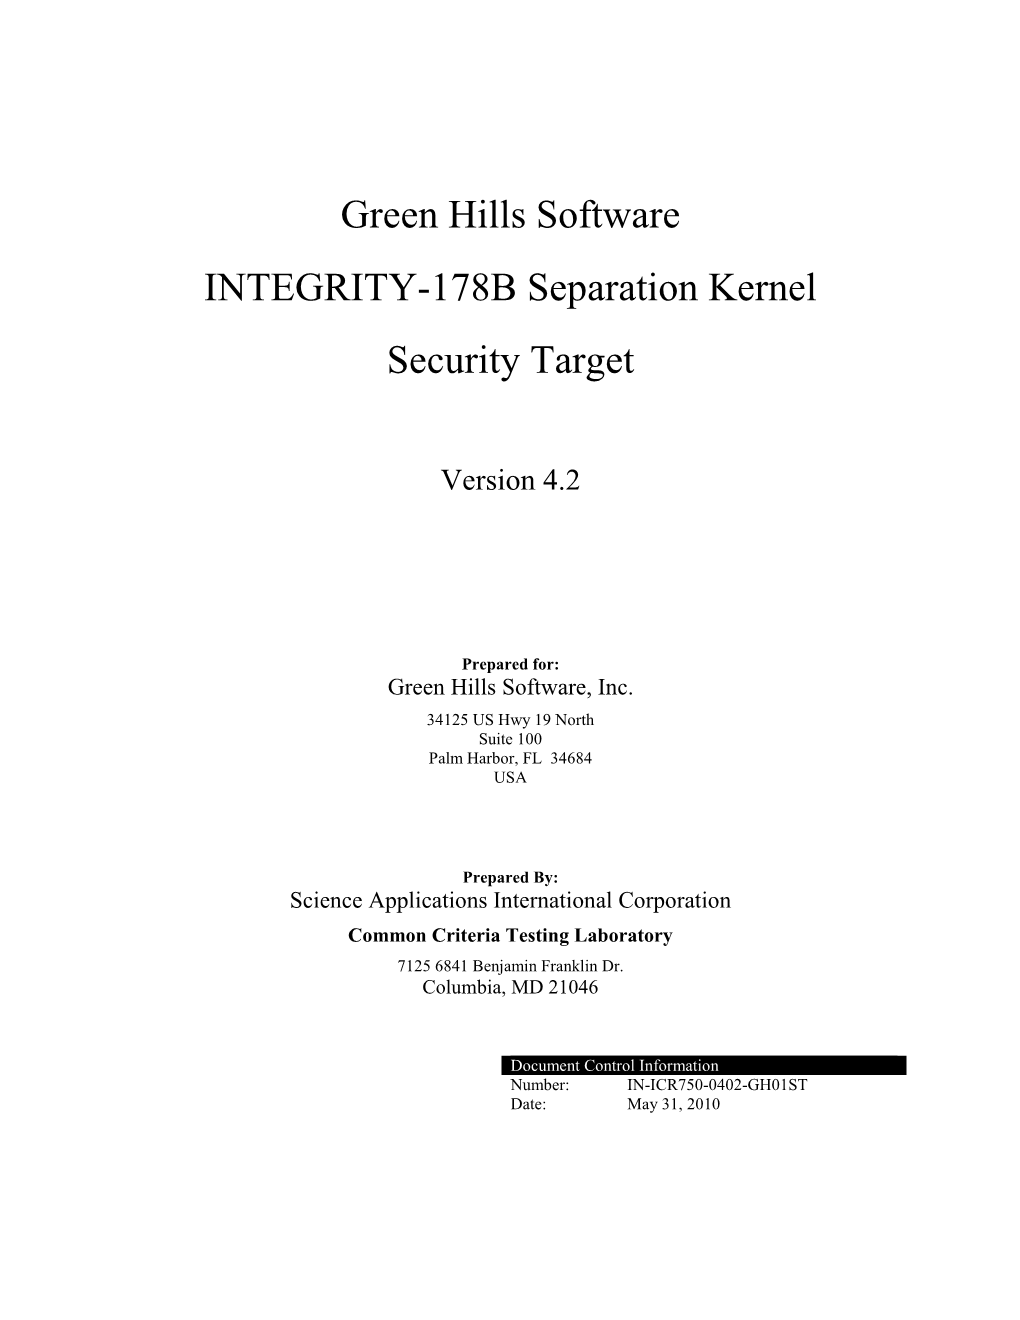 Green Hills Software INTEGRITY-178B Separation Kernel